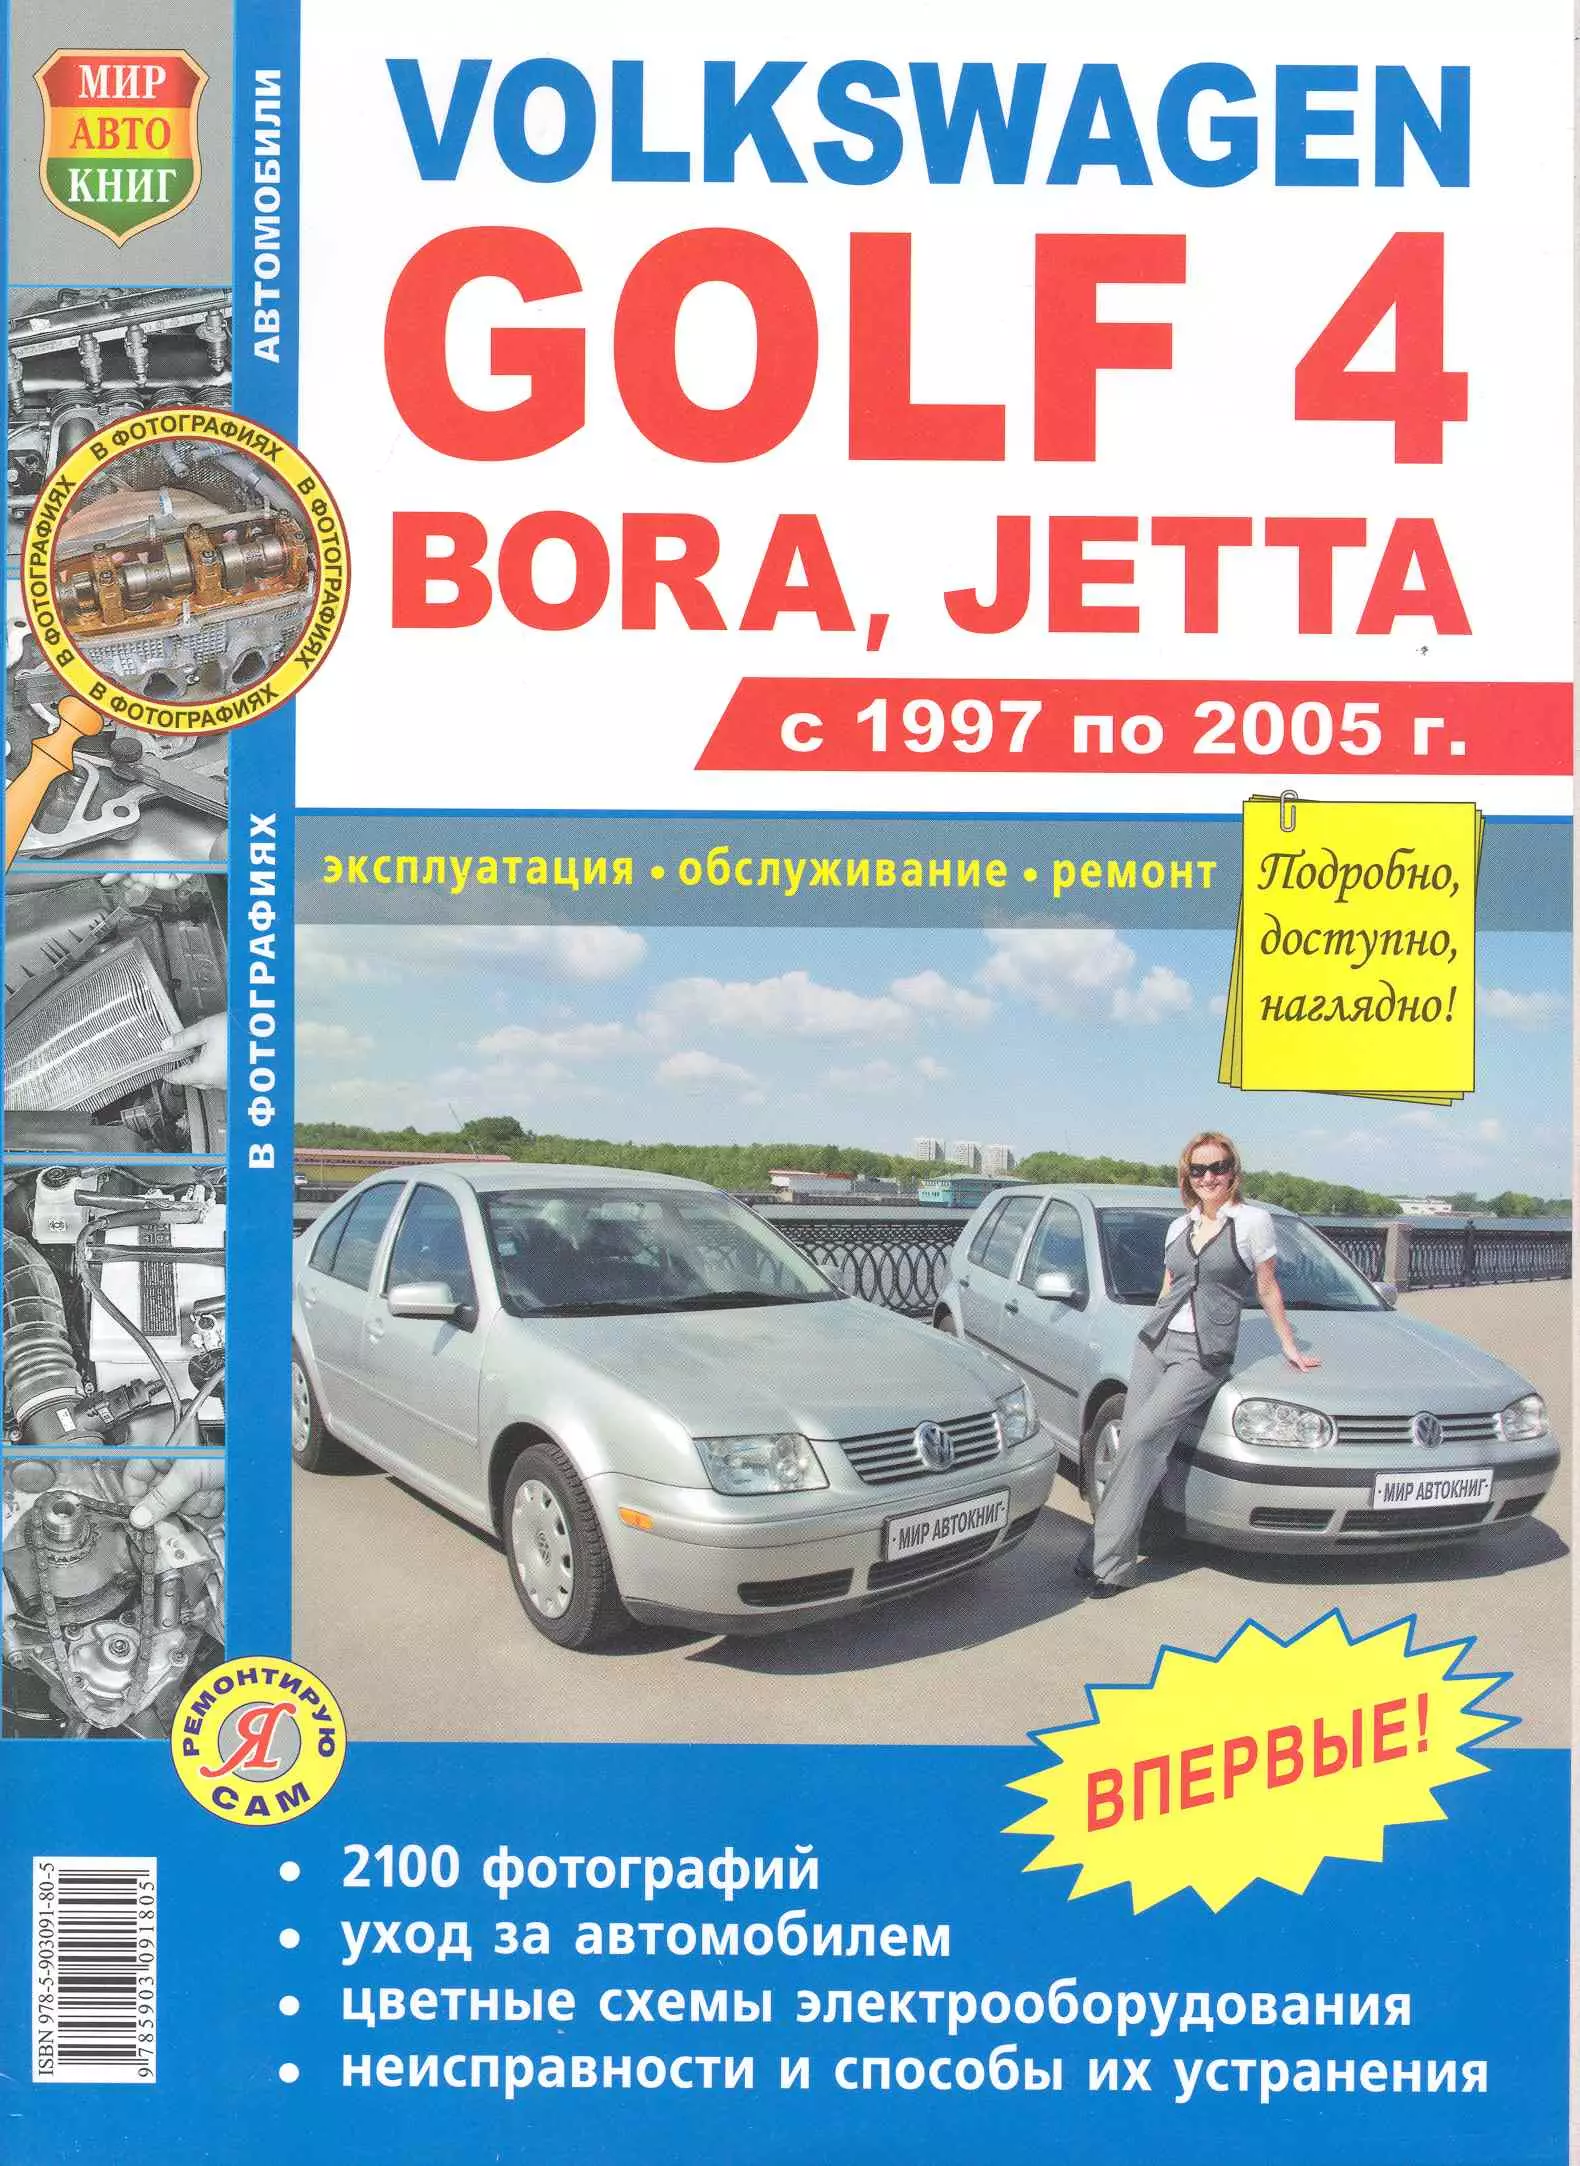 Книга фольксваген ремонт. Volkswagen Golf 4 Bora Jetta 1997 по 2005 мир Автокниг. Golf 4 книга по ремонту. Фольксваген Бора книга по ремонту. Фольксваген гольф 4 книга по ремонту.